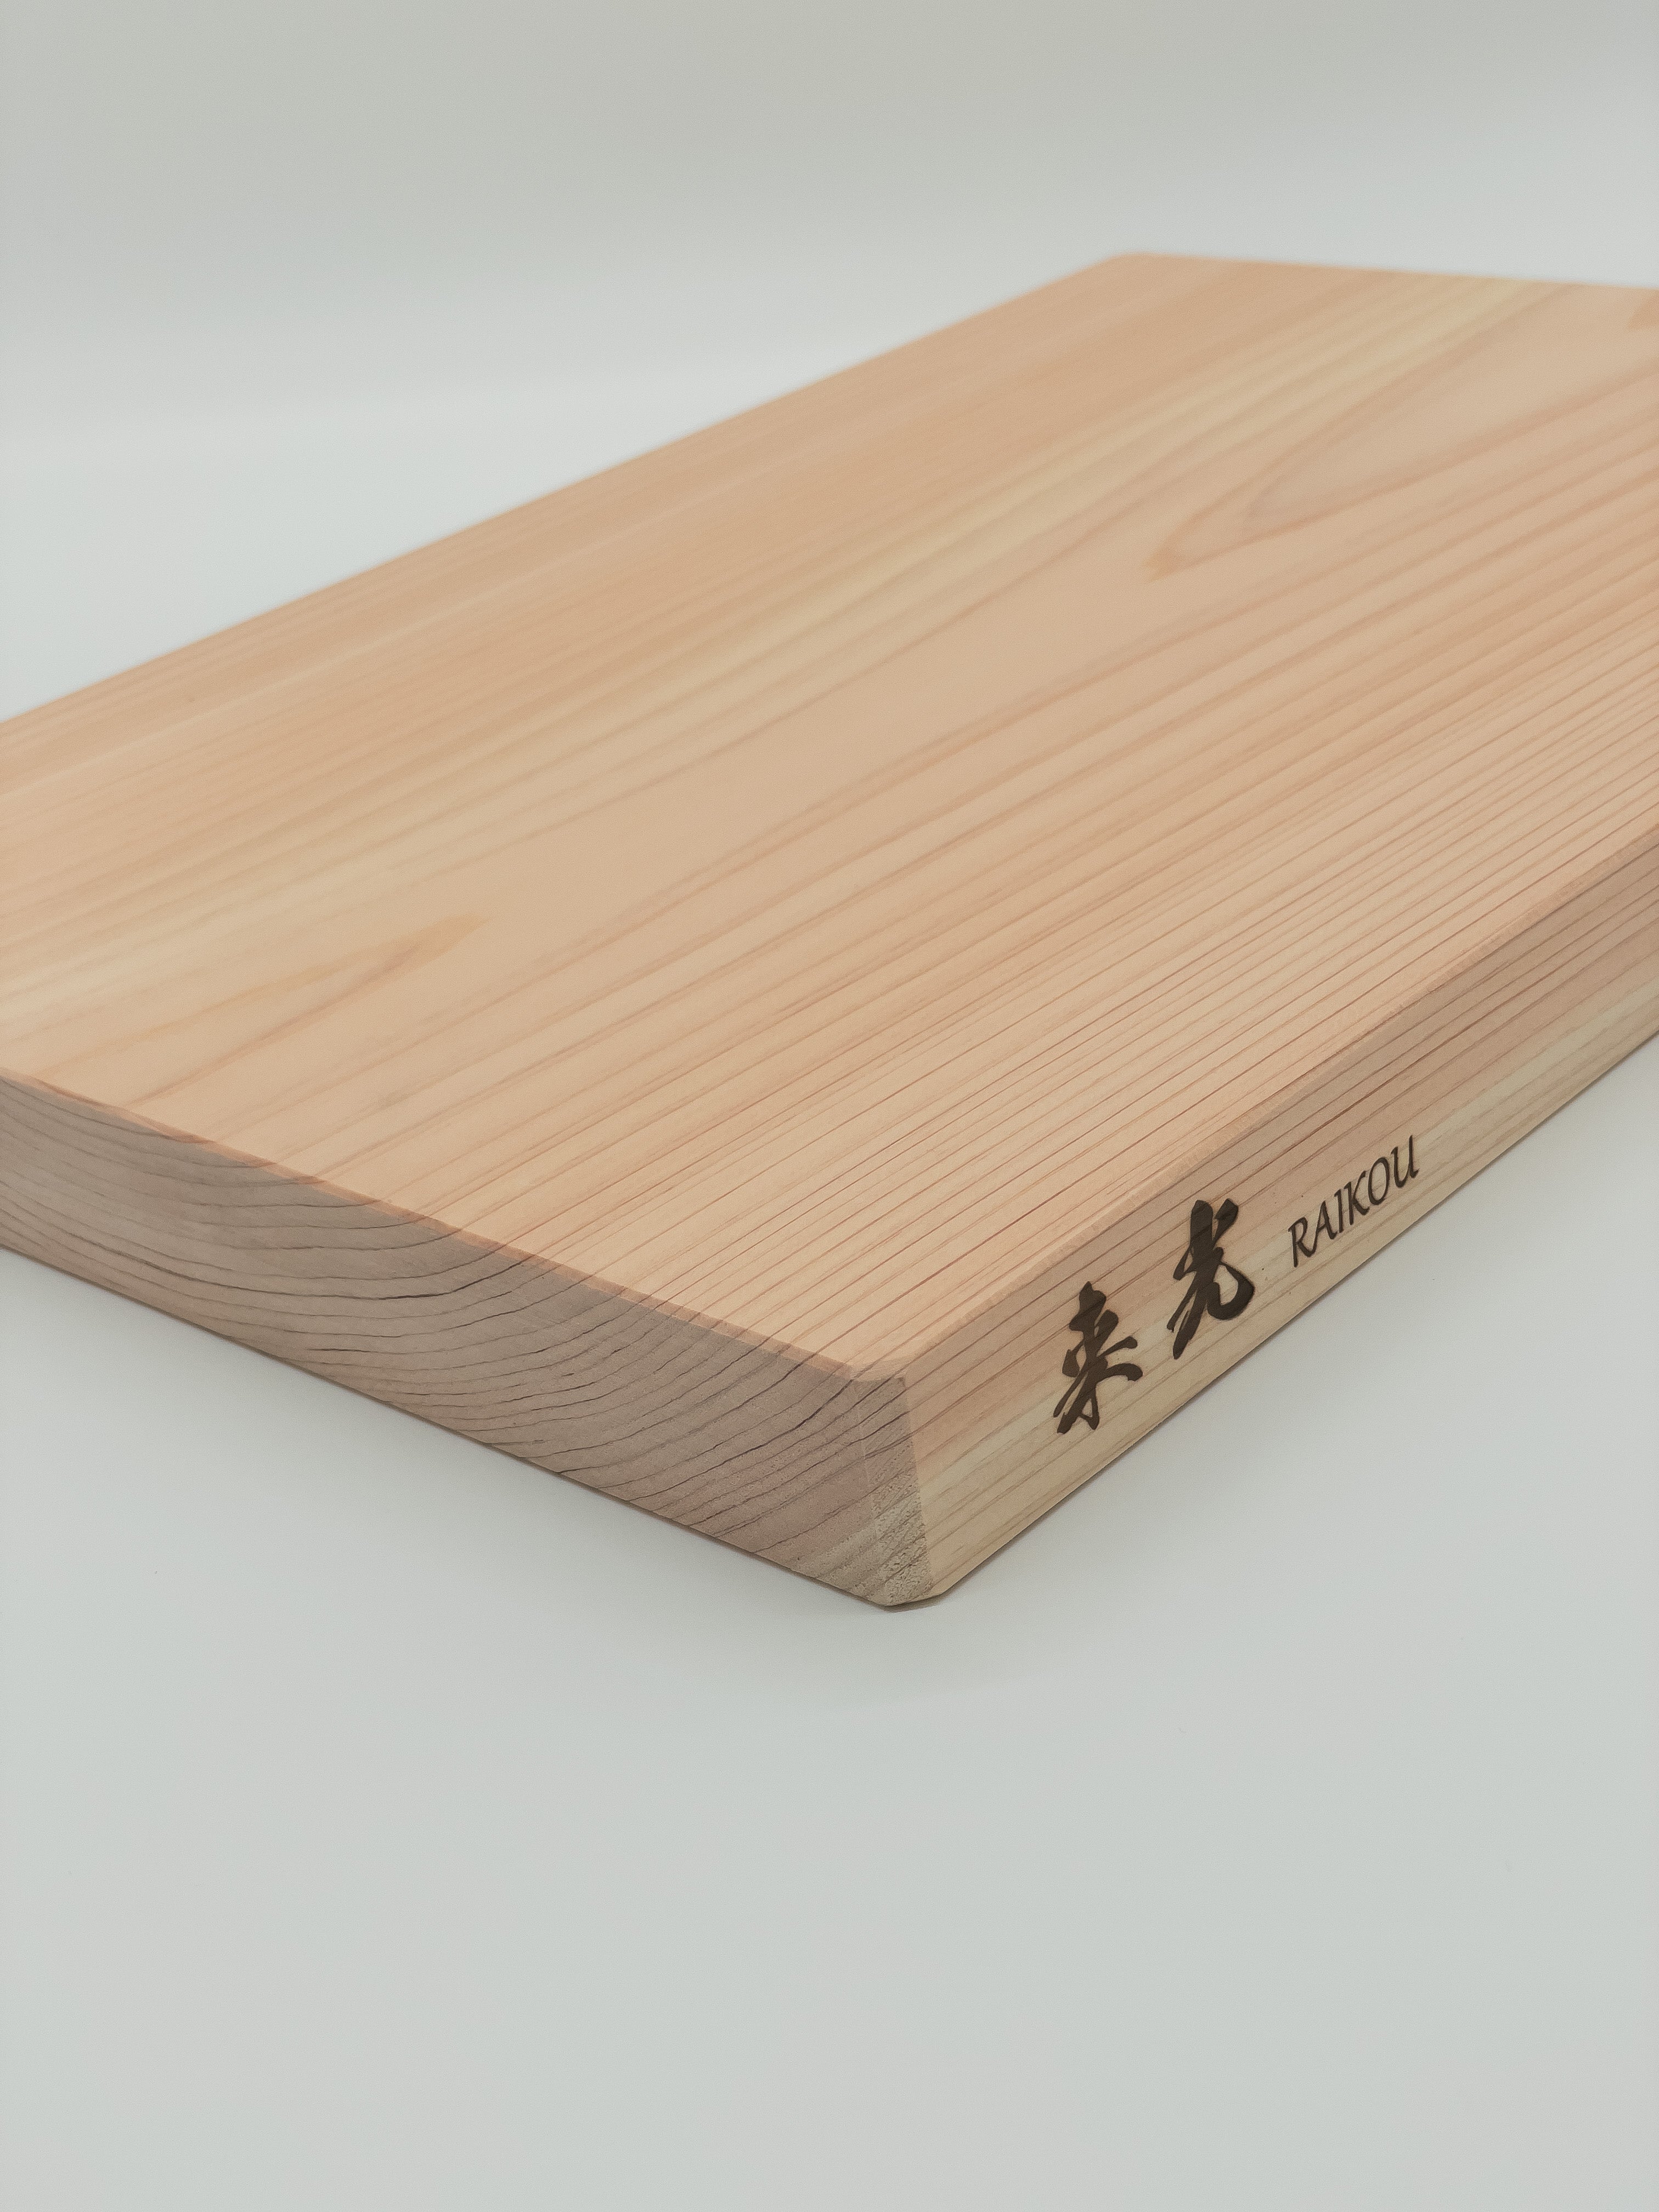 raikou handmade natural hinoki wood cutting board top down broad view